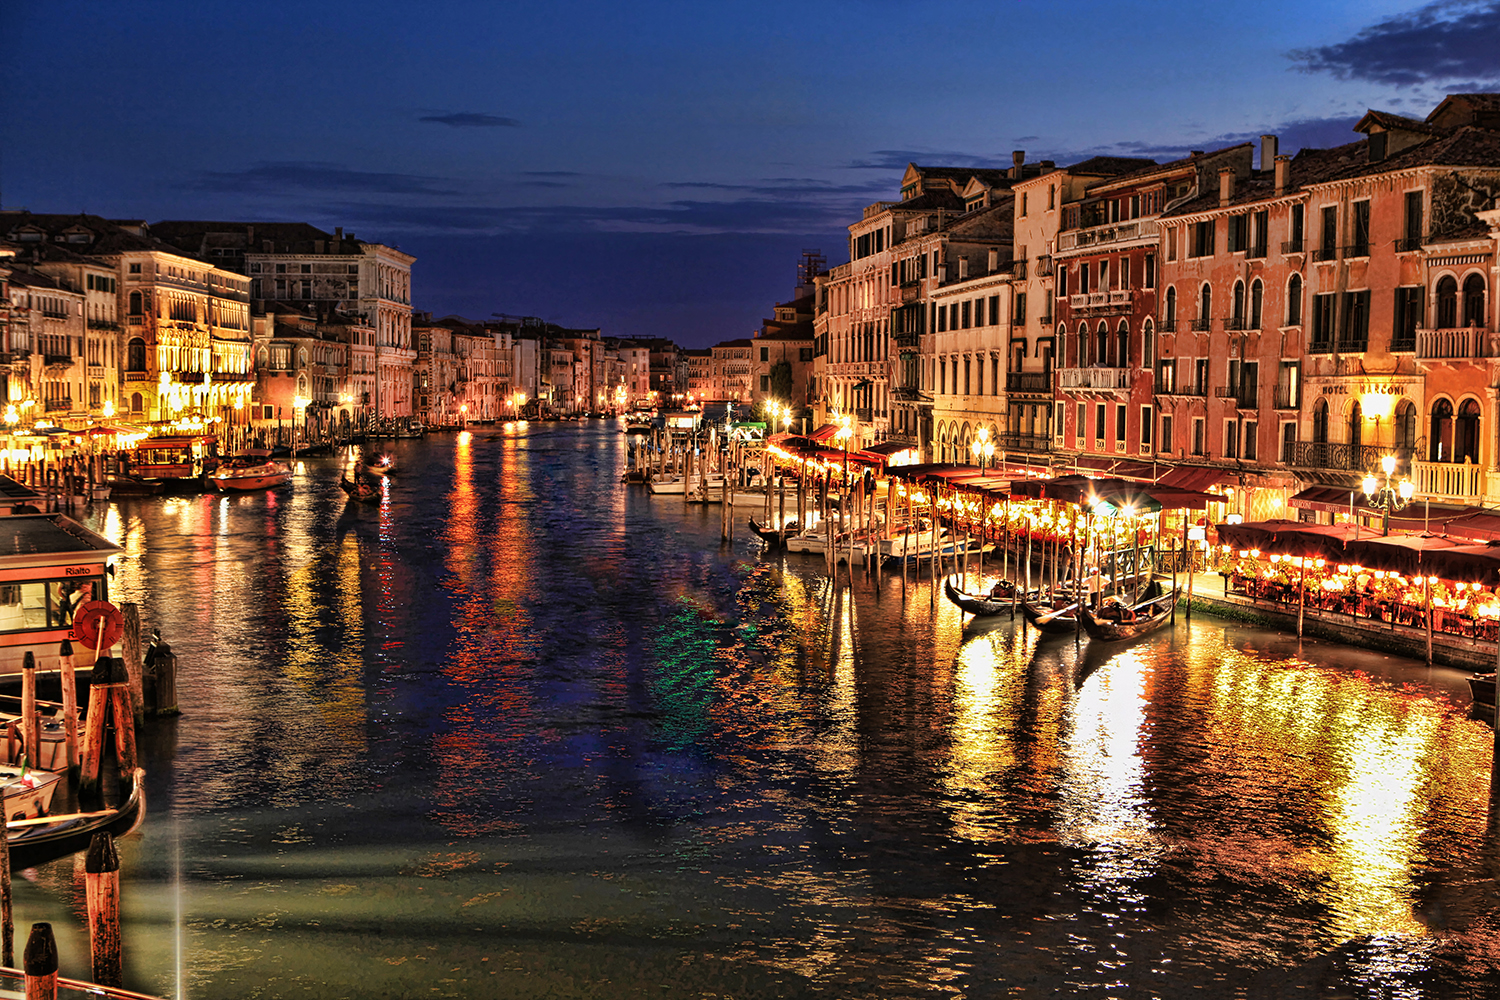 Venice Nightscape from the Rialto Bridge - Resized.jpg